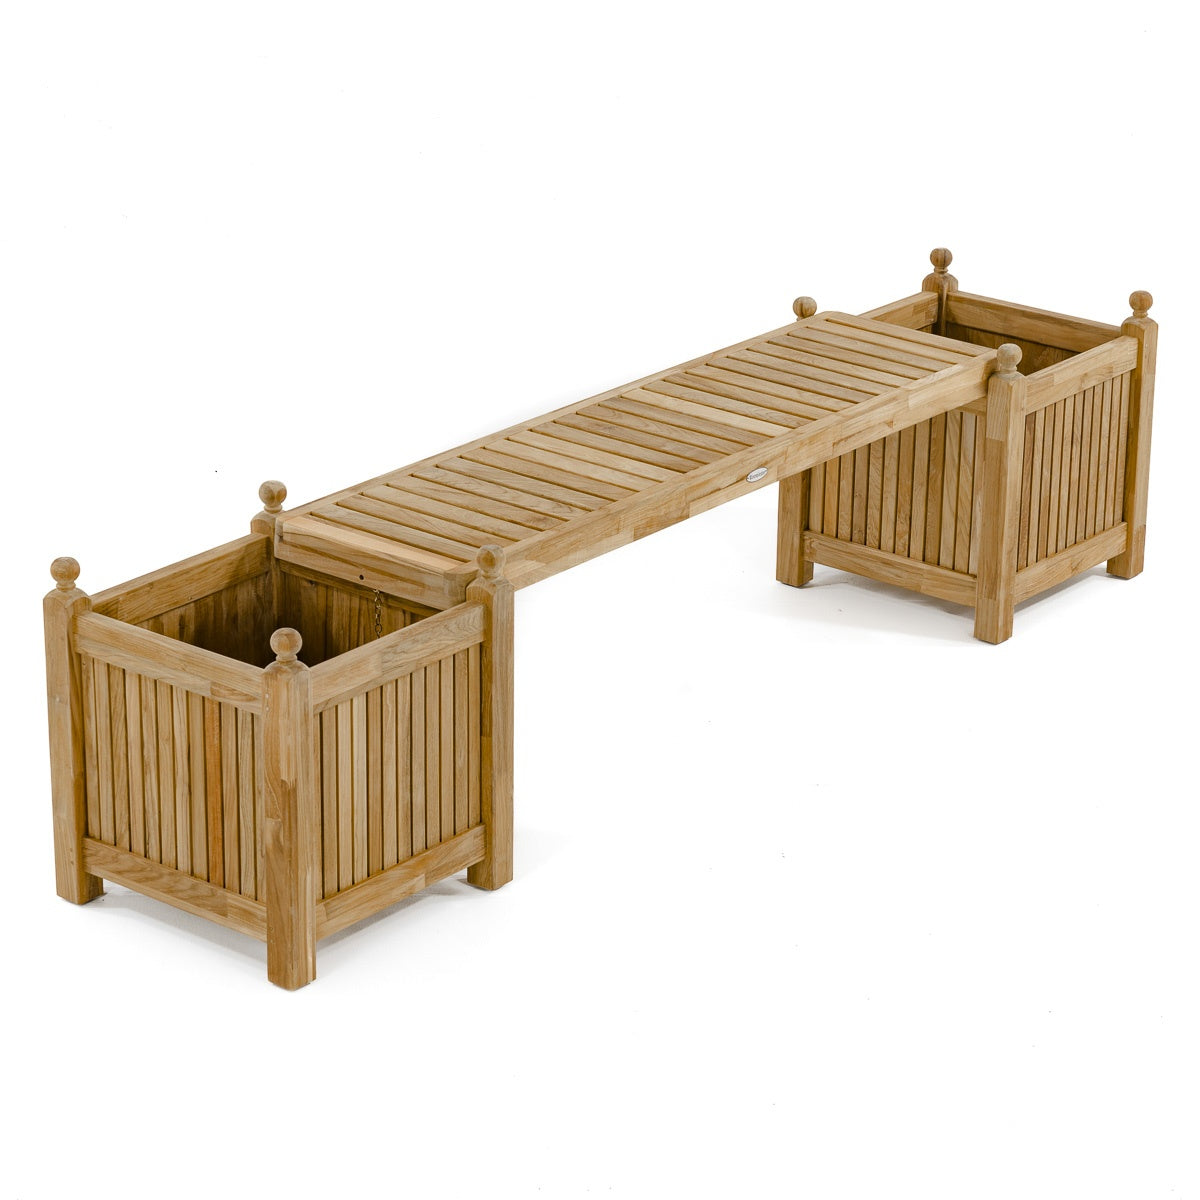 Westminster Teak - Double Planter Bench Set 3 PLANTERS & 2 SEAT PANELS - 70071